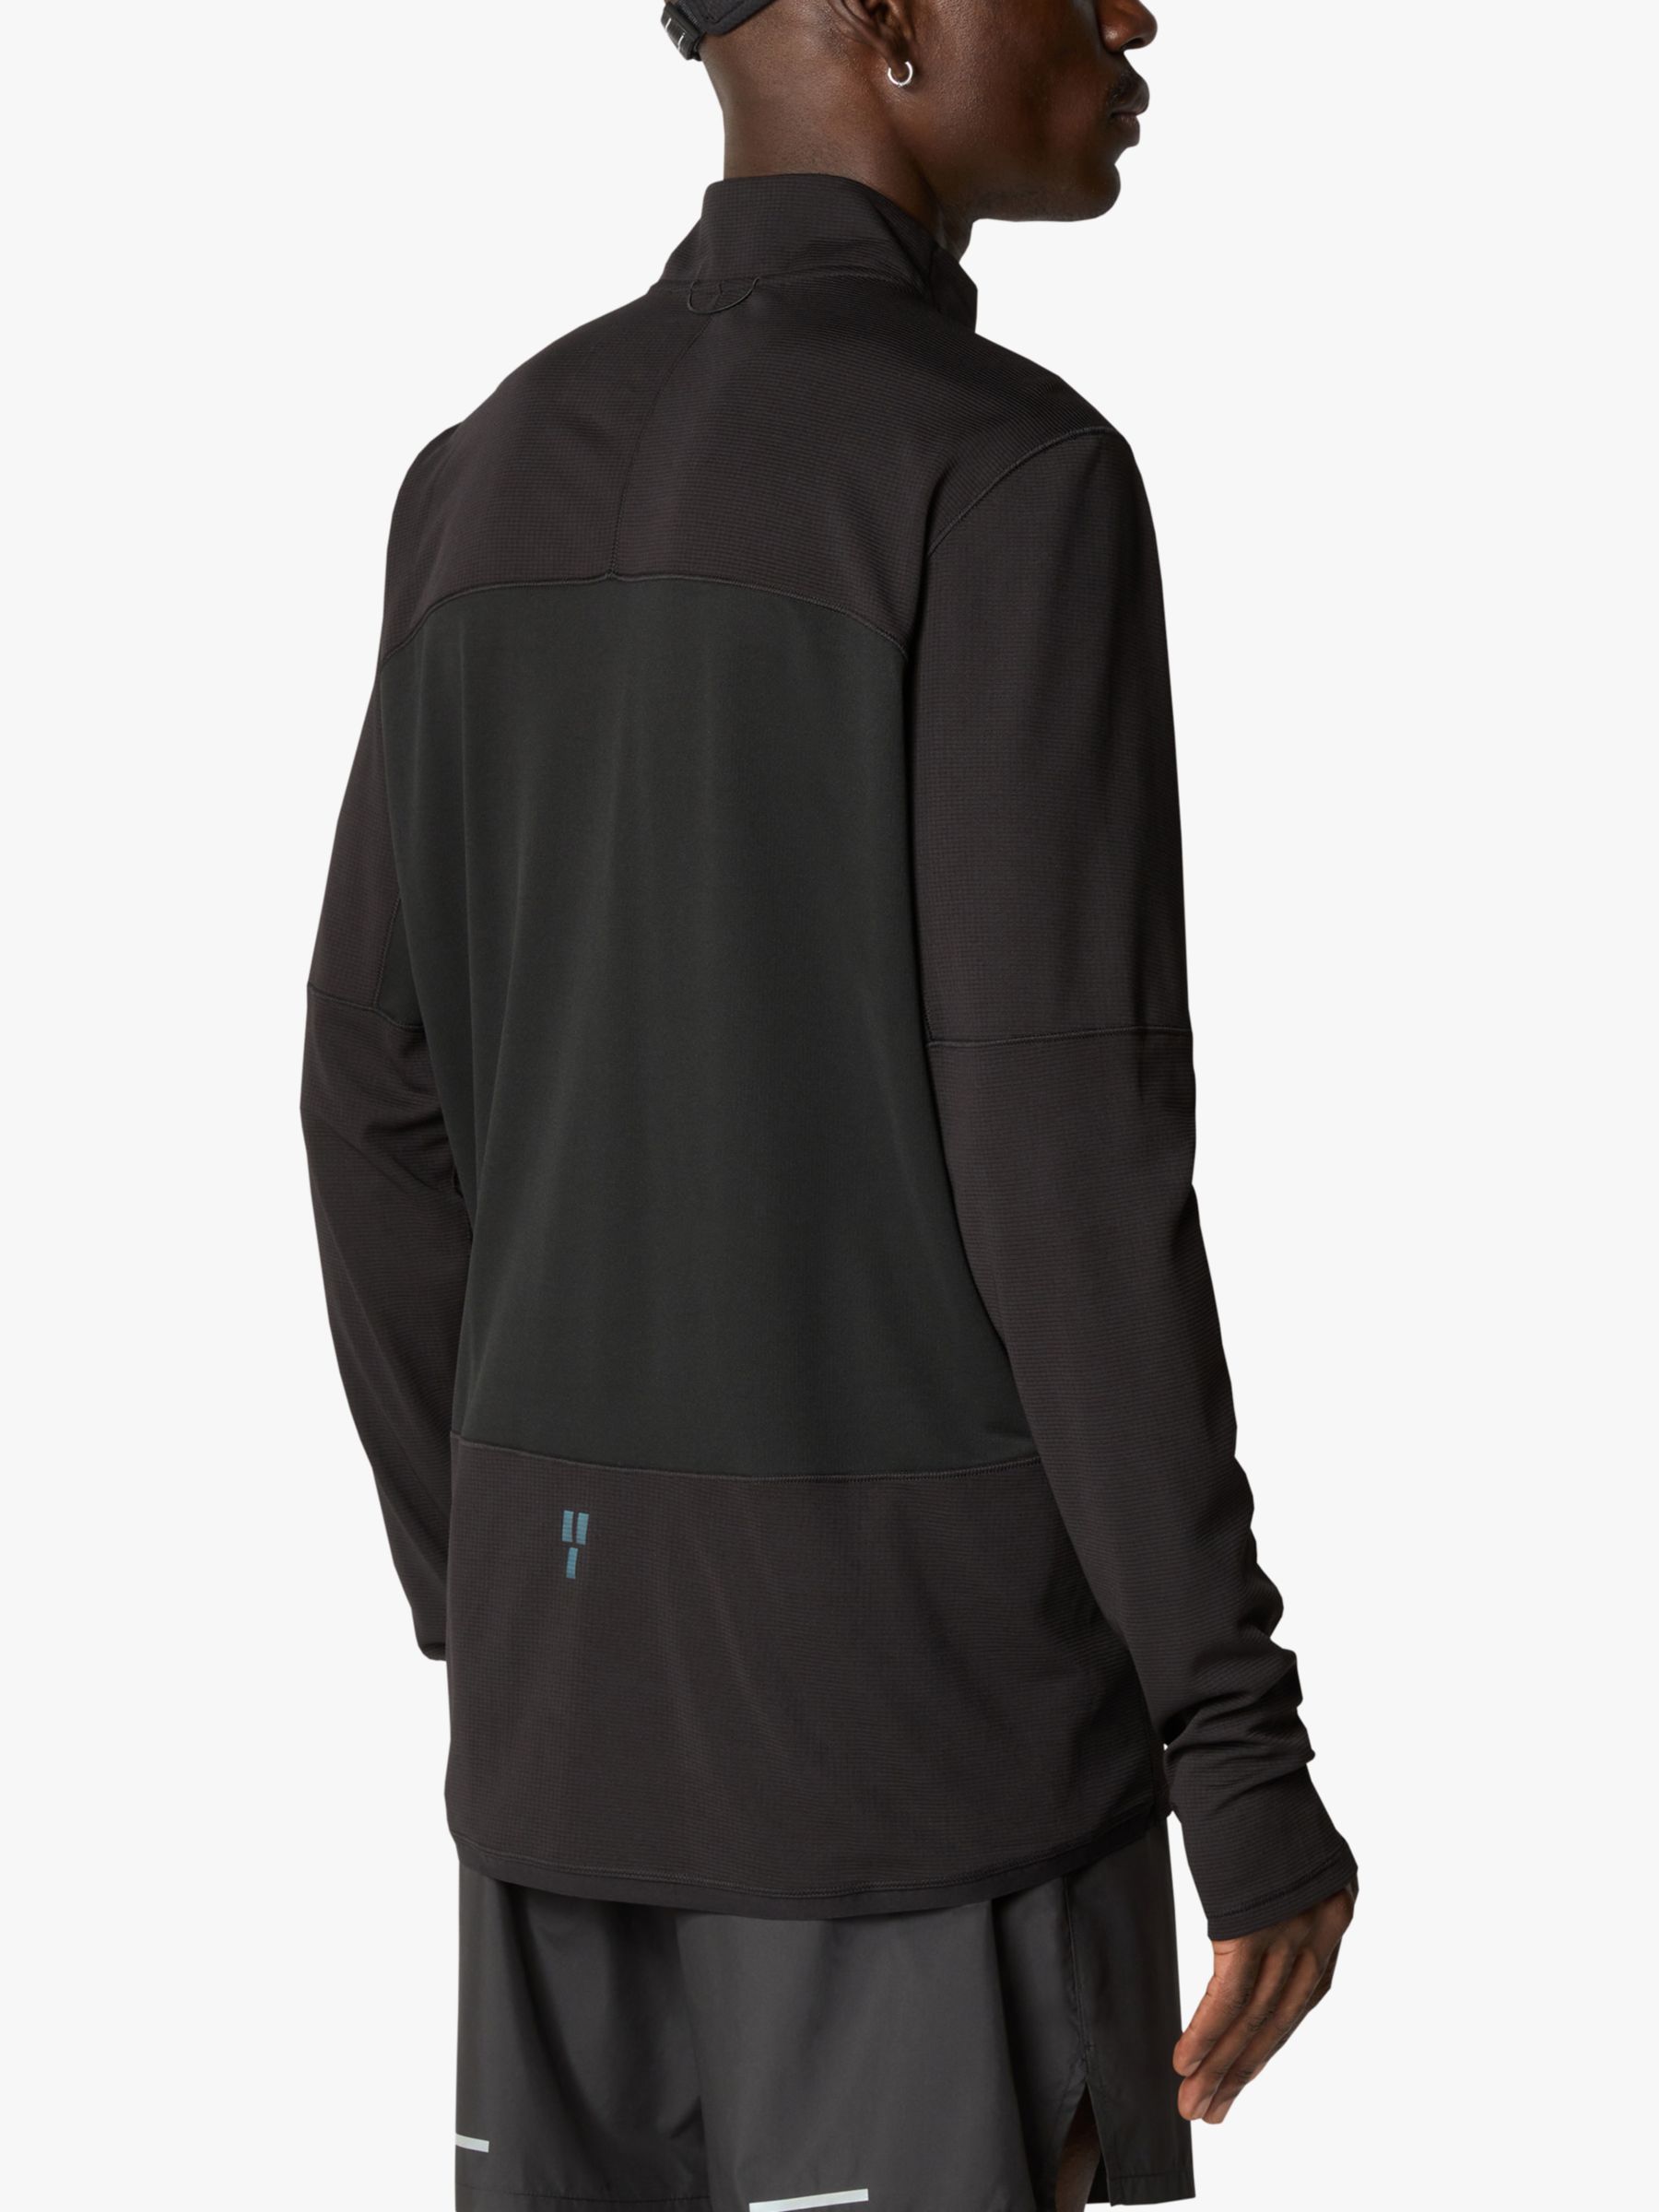 The North Face Sunriser 1/4 Zip Long Sleeve Top, Black, XL